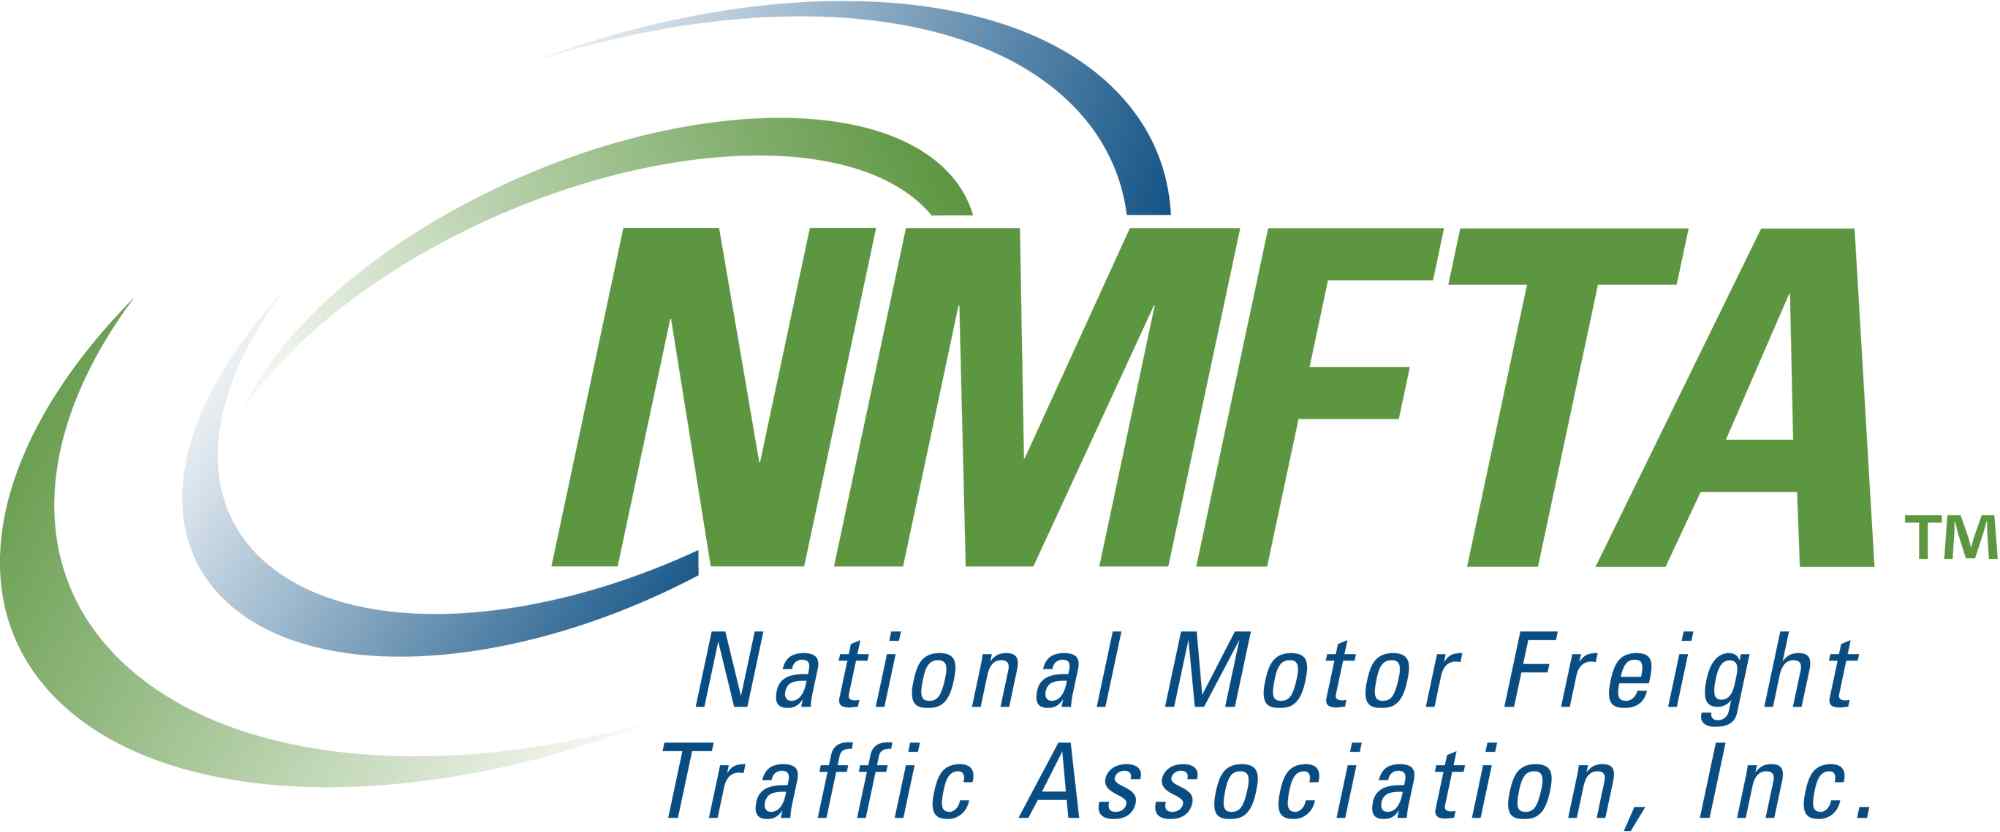 NMFTA Logo-compressed